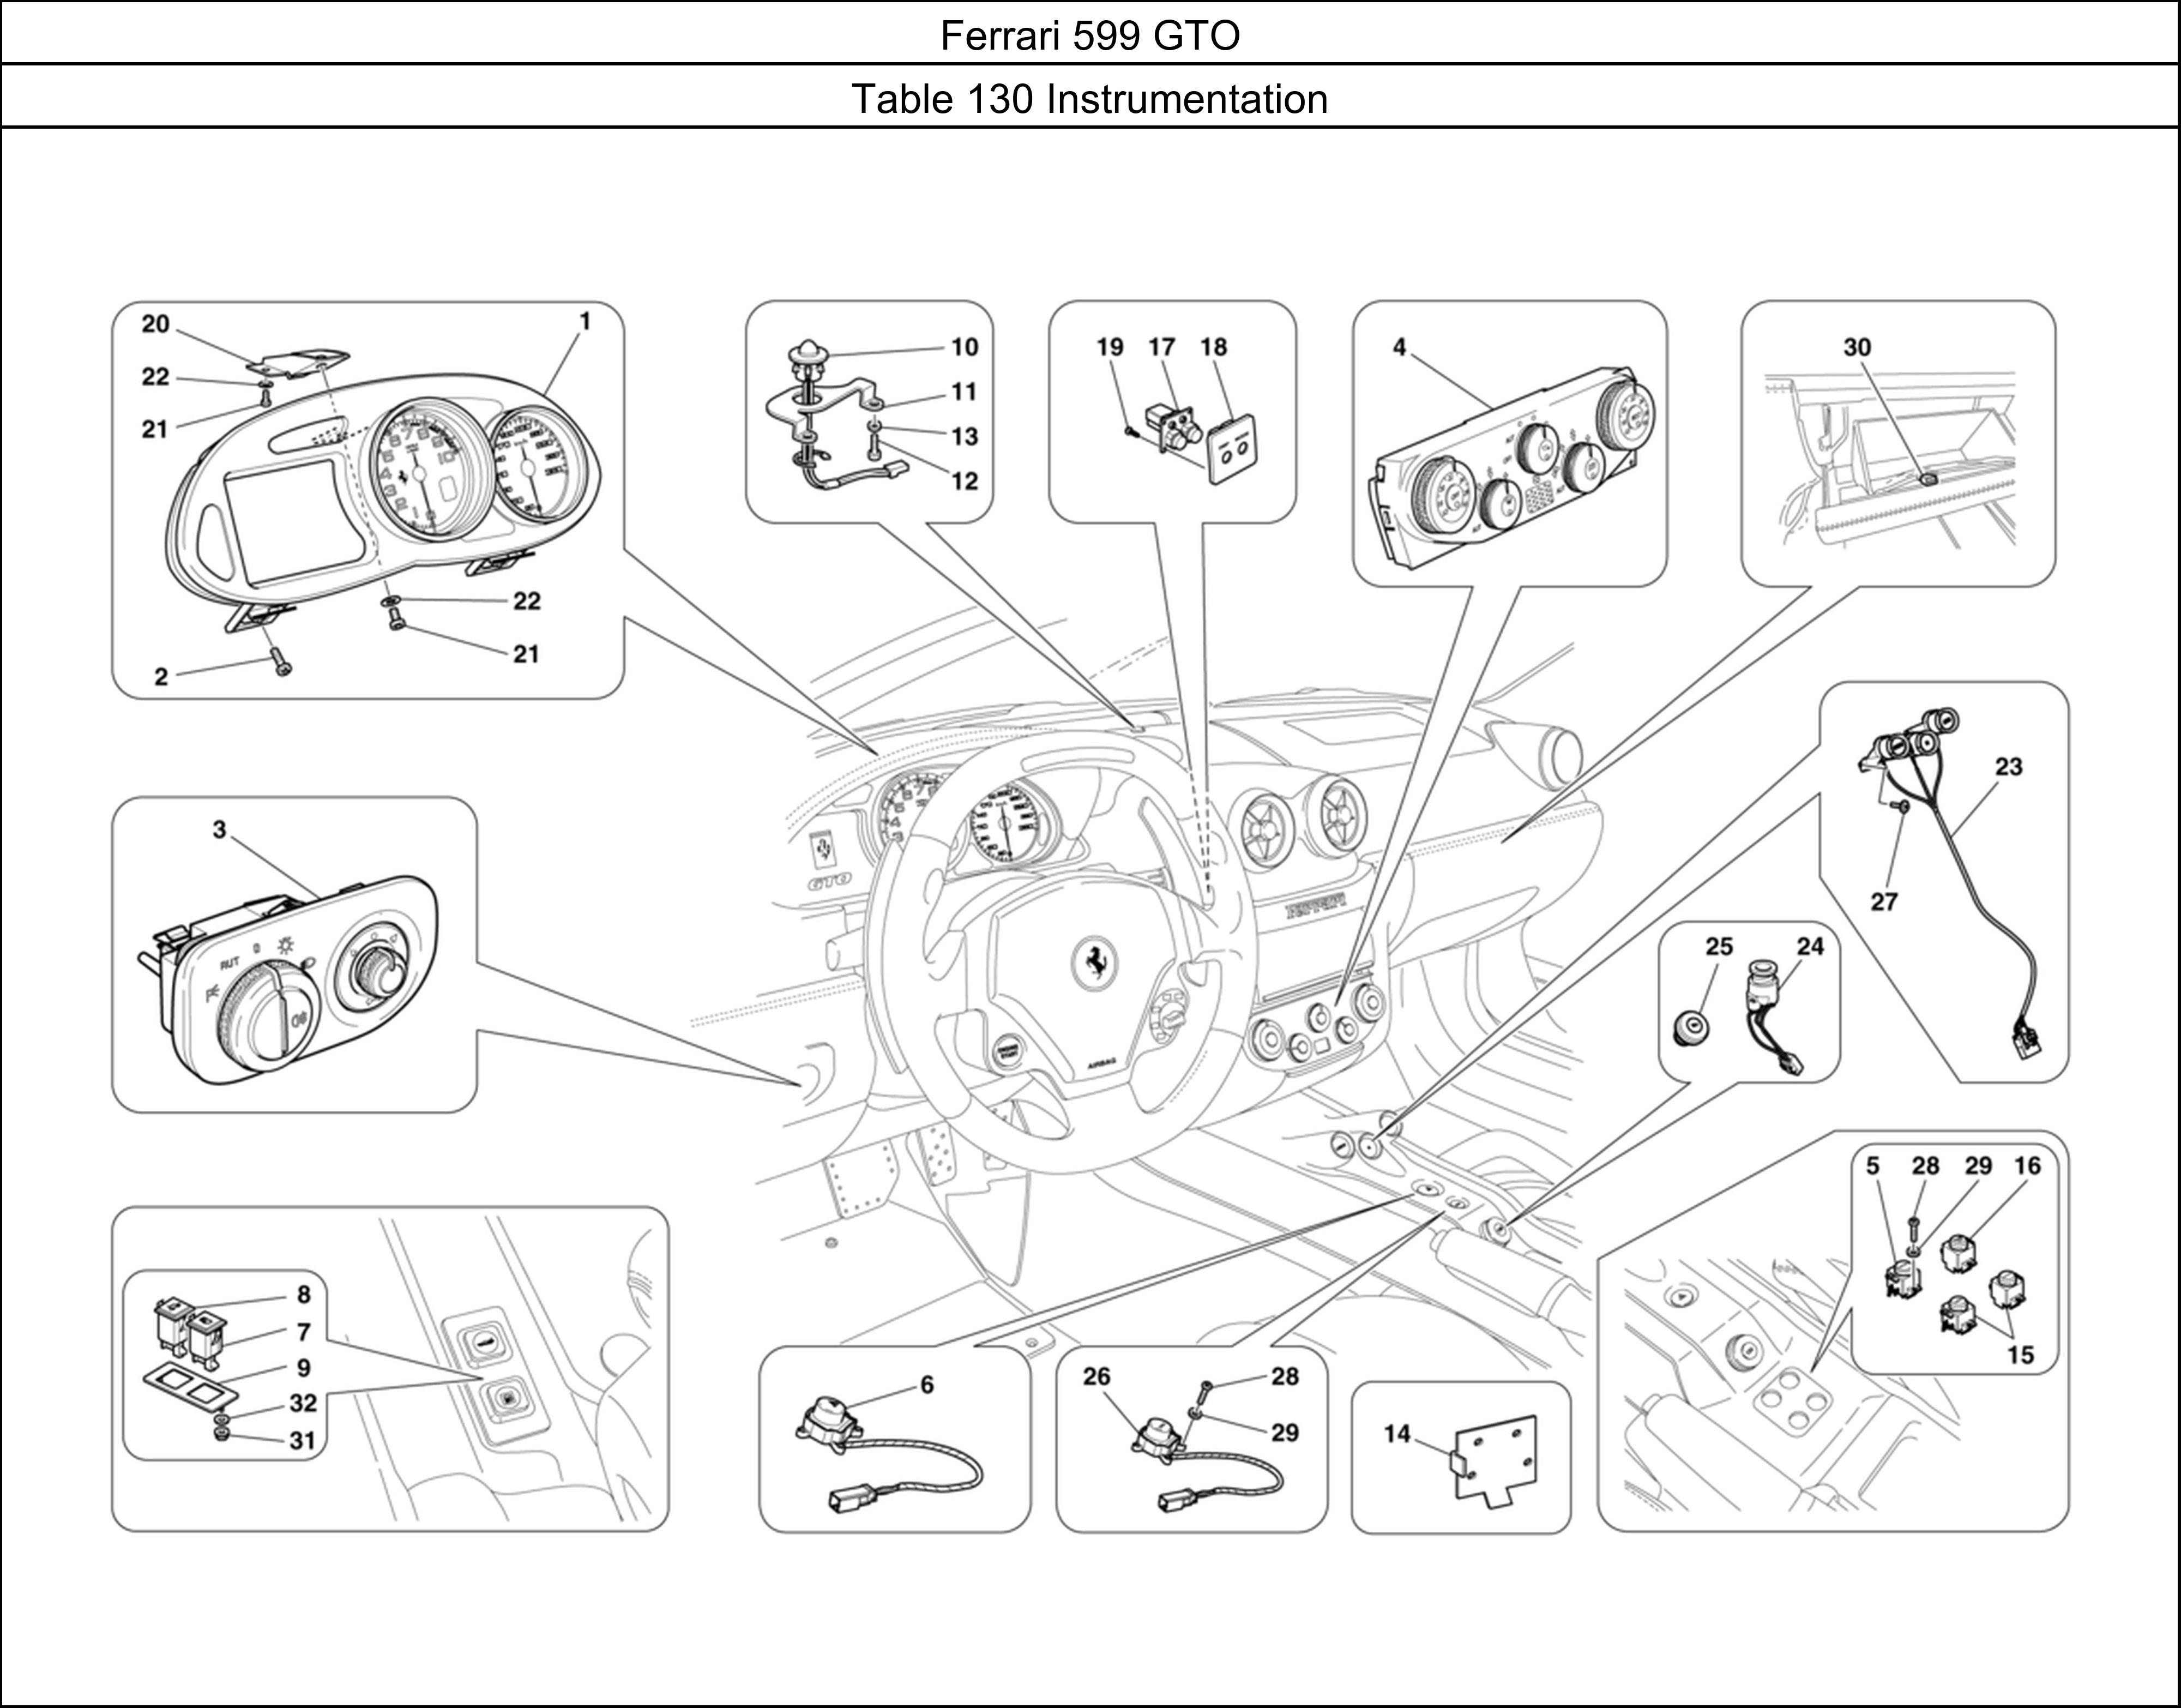 Ferrari Parts Ferrari 599 GTO Table 130 Instrumentation